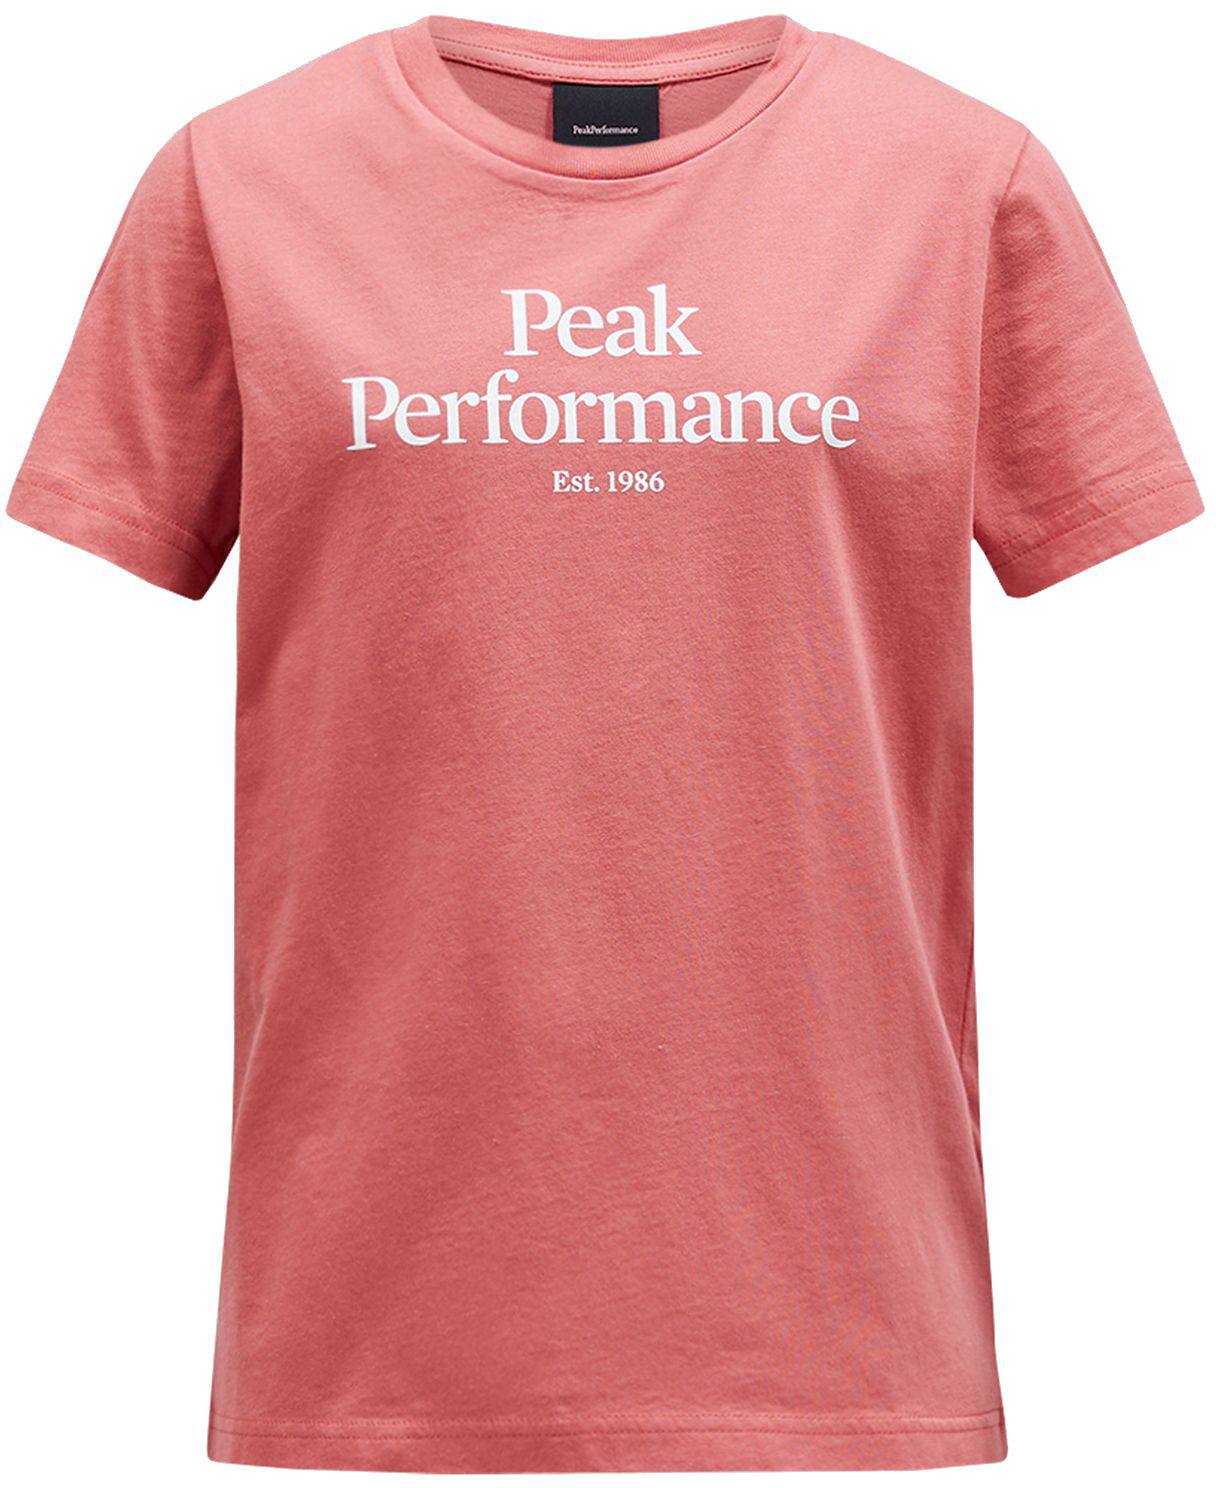 Peak Performance Jr Original Tee Pink 150